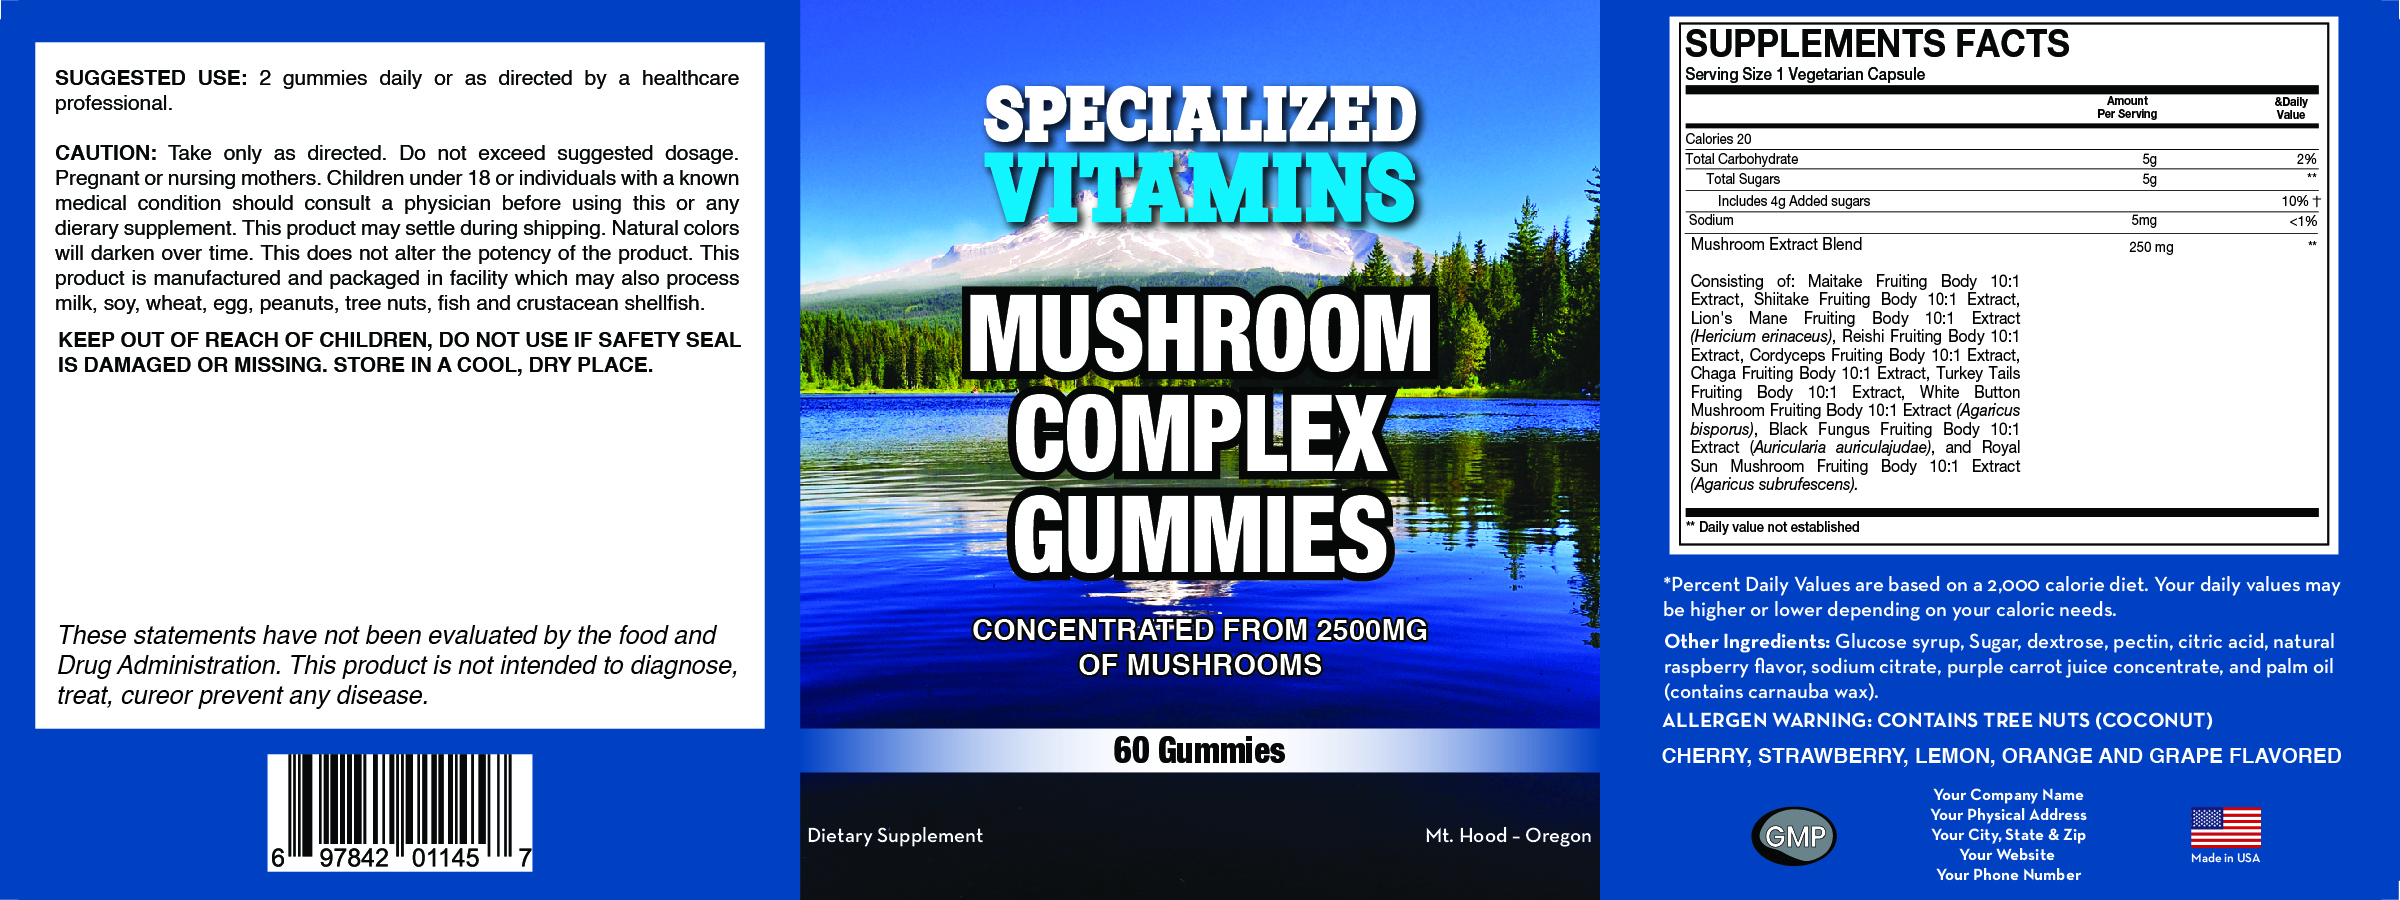 Mushroom Complex Gummies – Vegetarian - 60 Gummies